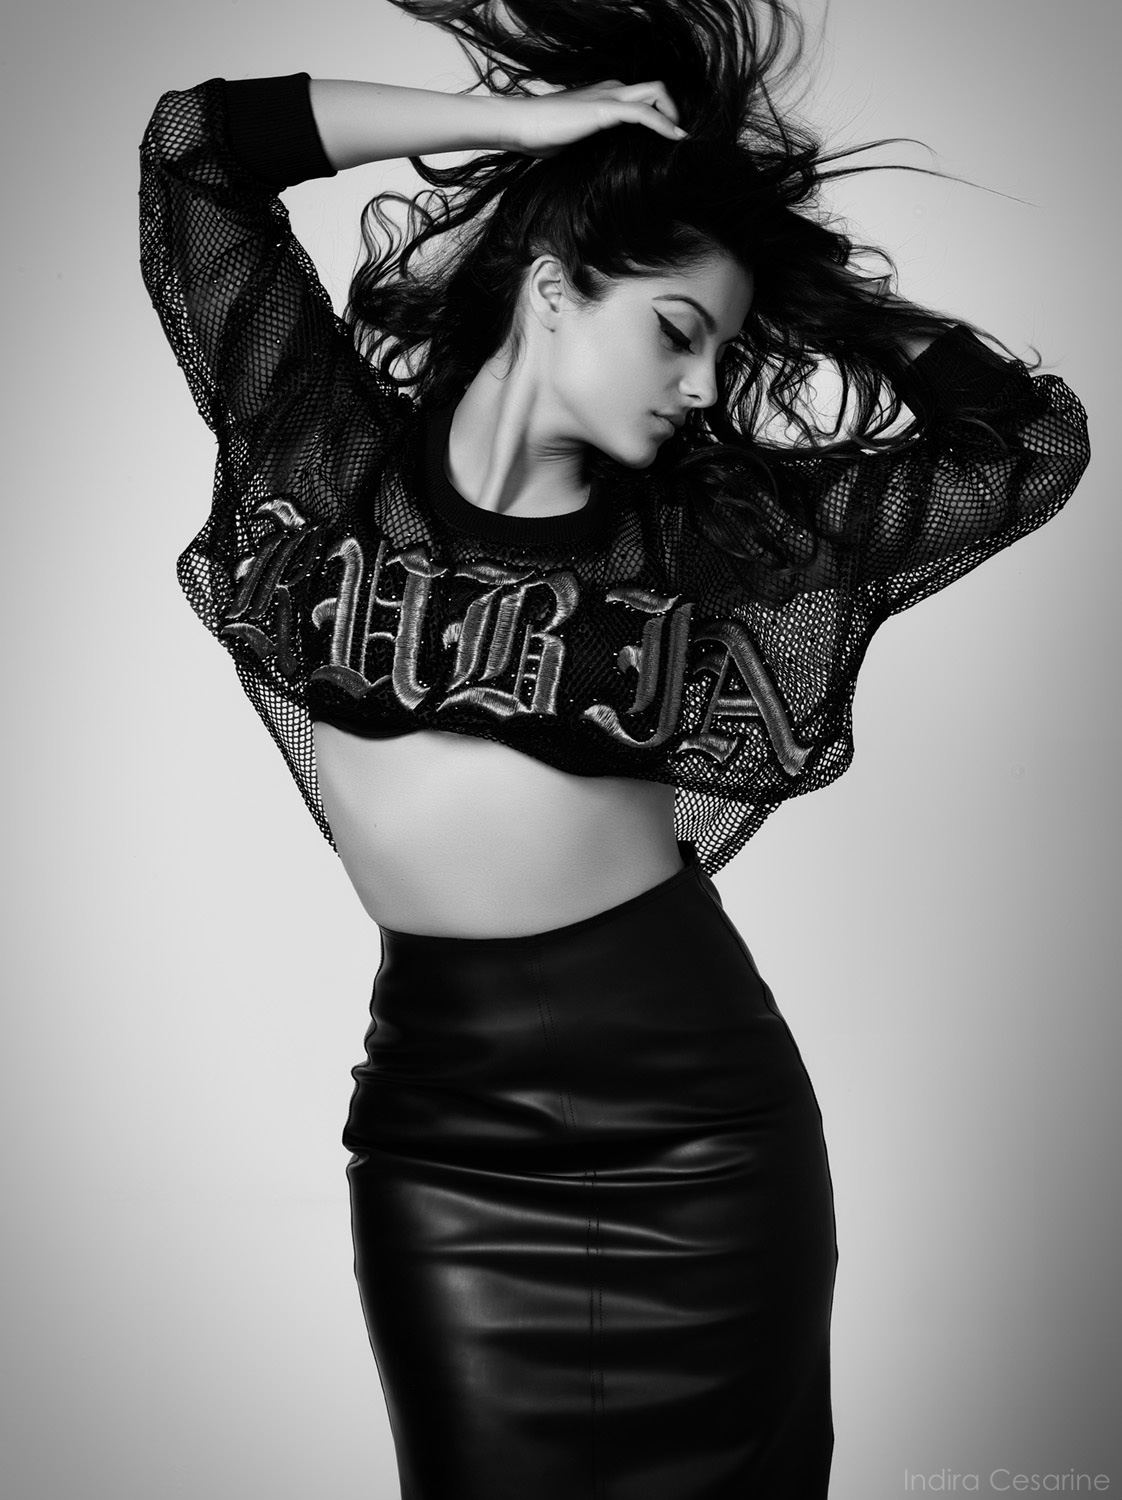 Bebe-Rexha-Photography-by-Indira-Cesarine-008.jpg